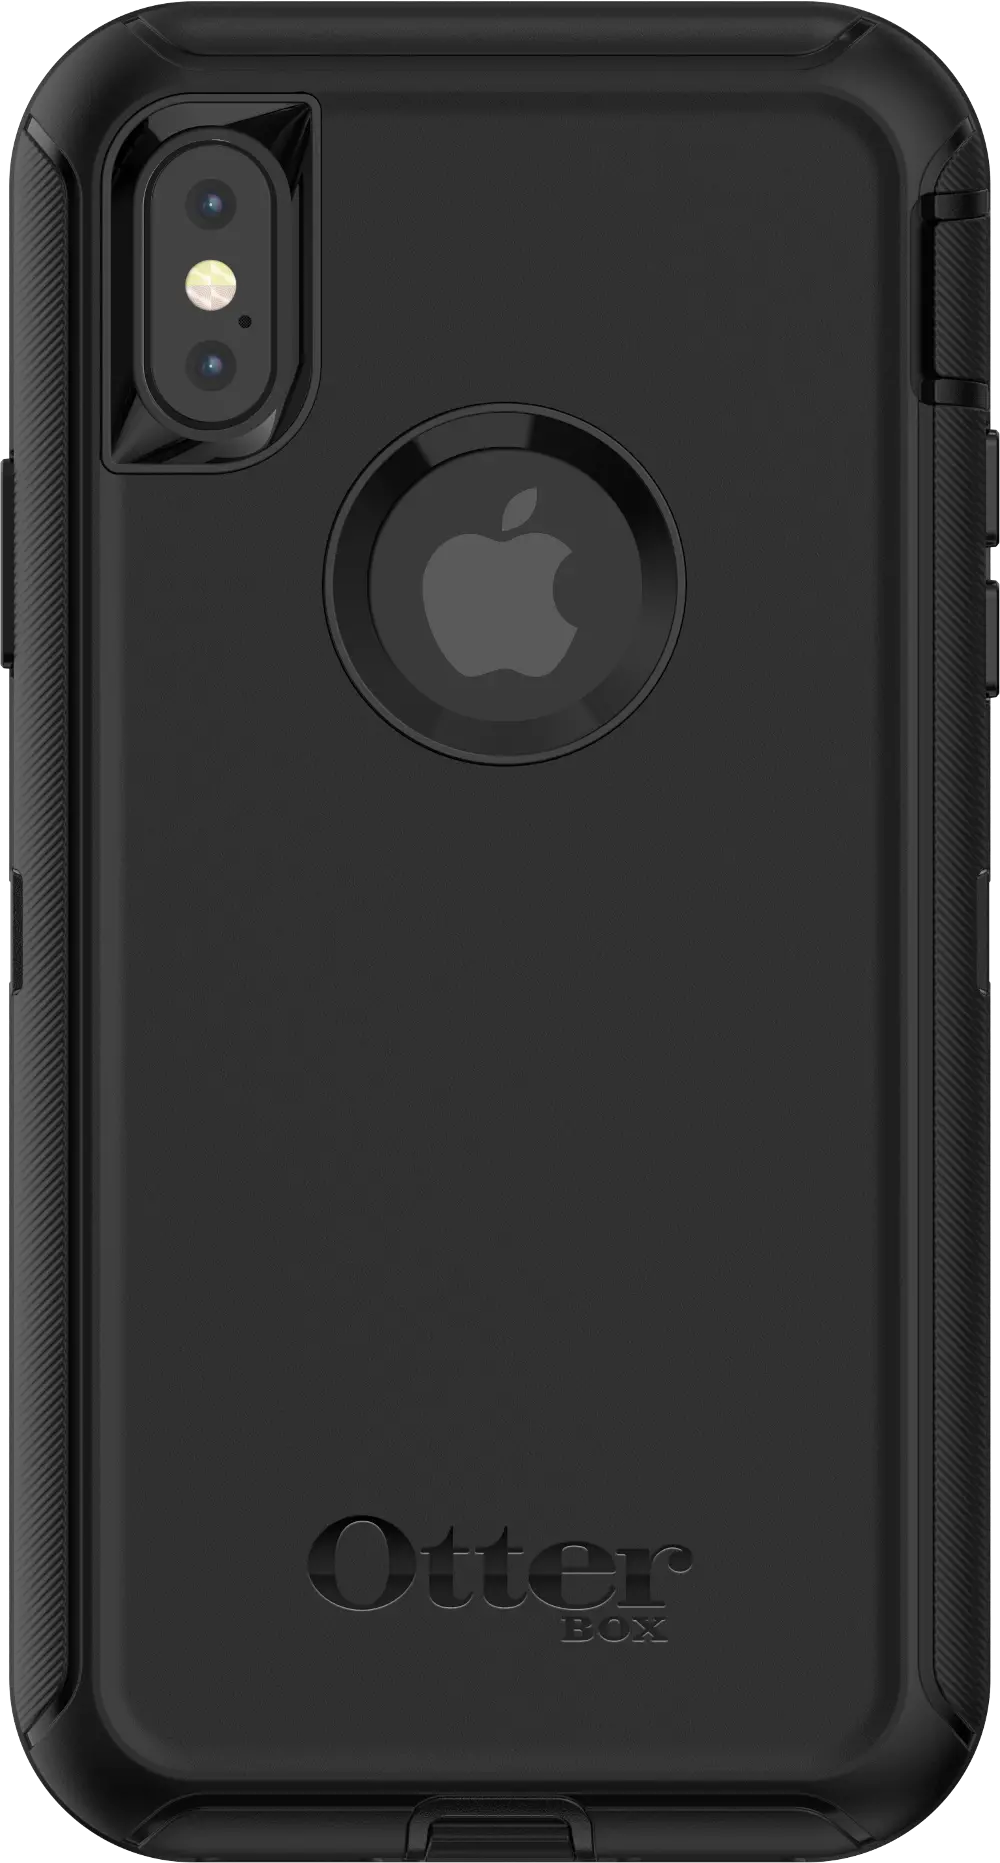 77-57026,D-IPX-BLK OtterBox Defender Black iPhone X Case-1